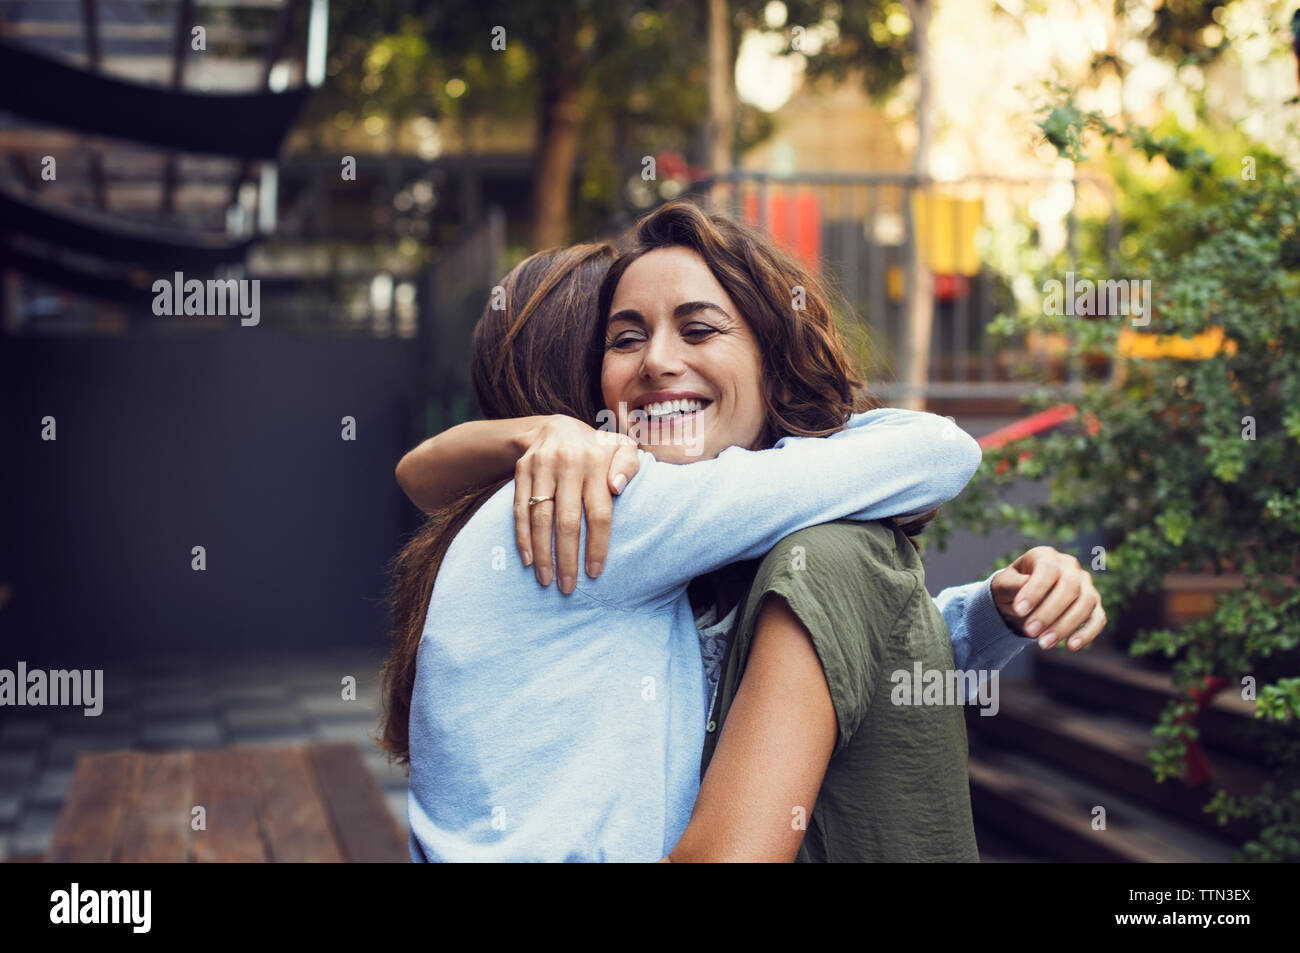 Affectueux mature women embracing at sidewalk cafe Banque D'Images